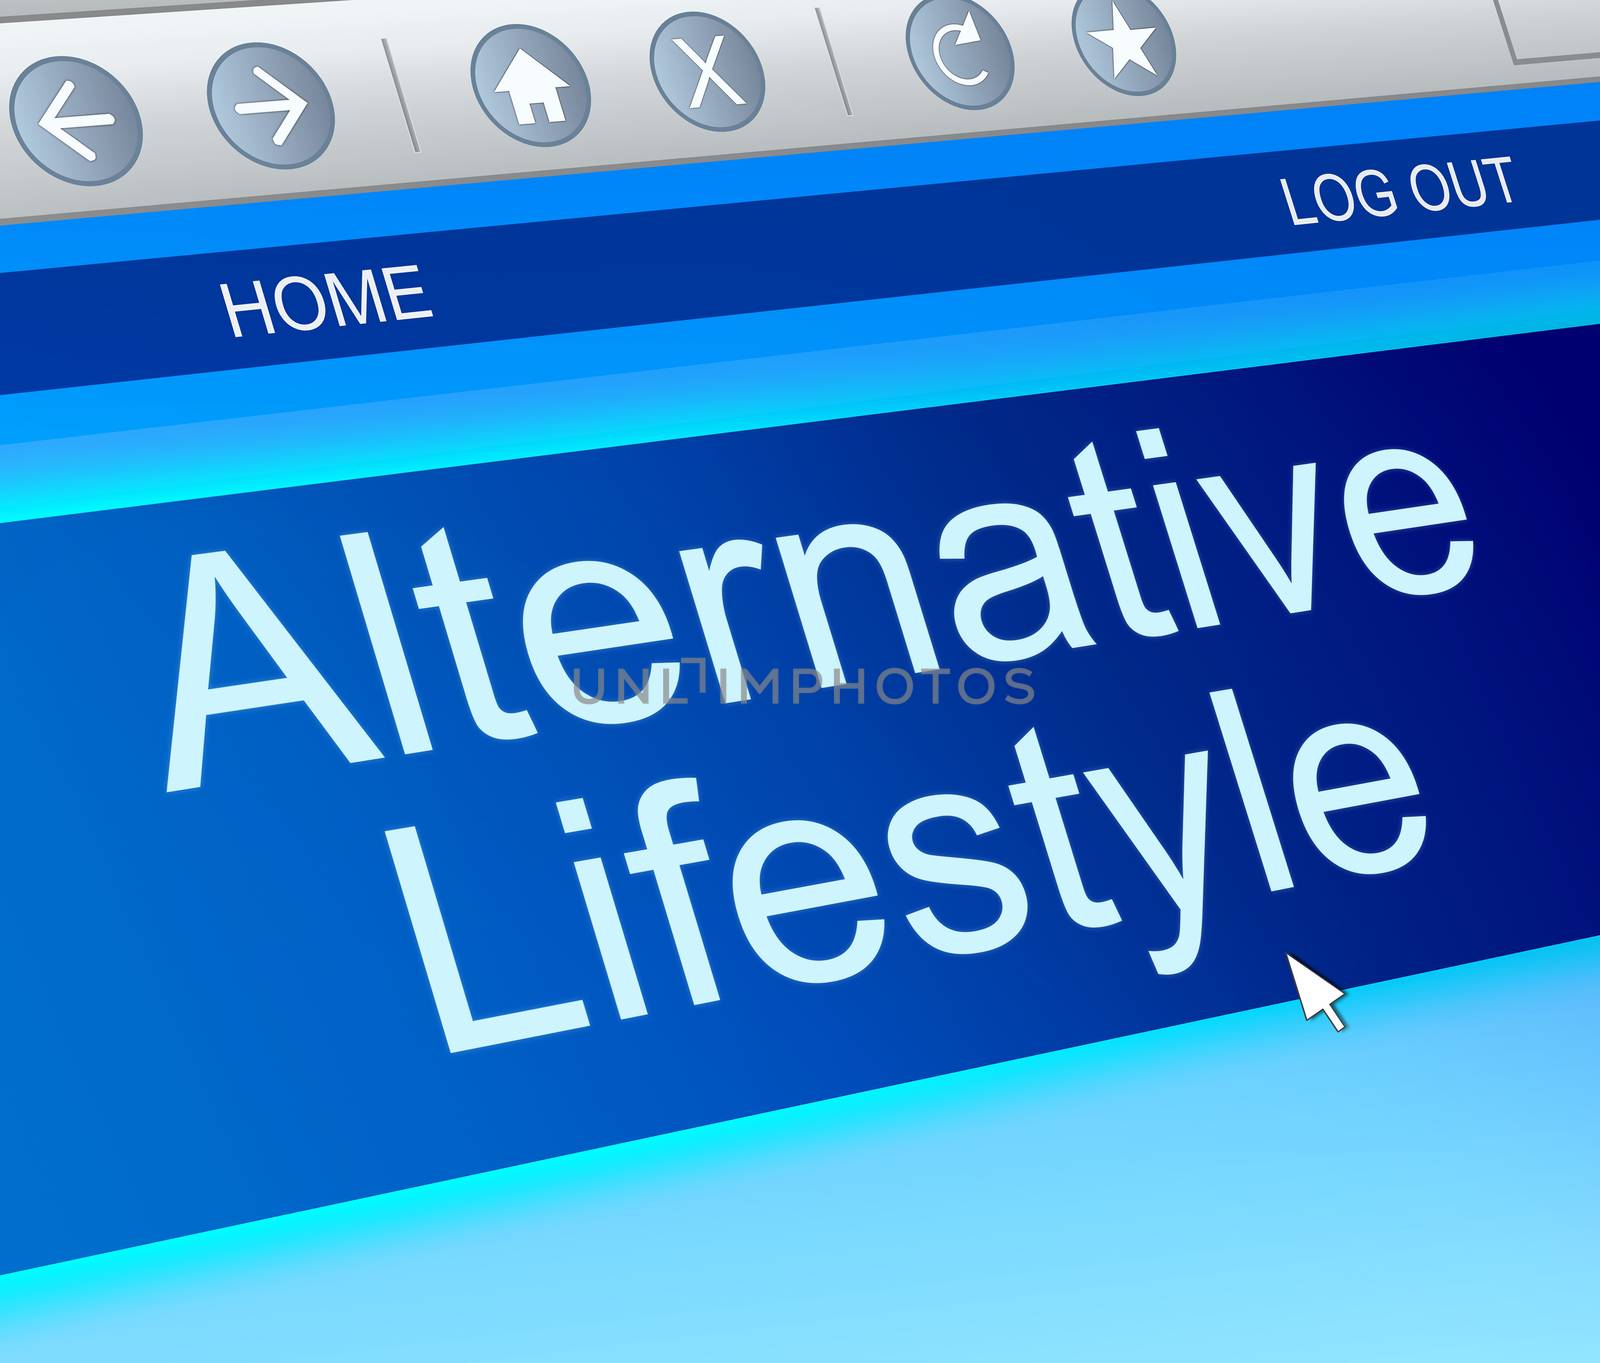 Alternative lifestyle concept. by 72soul